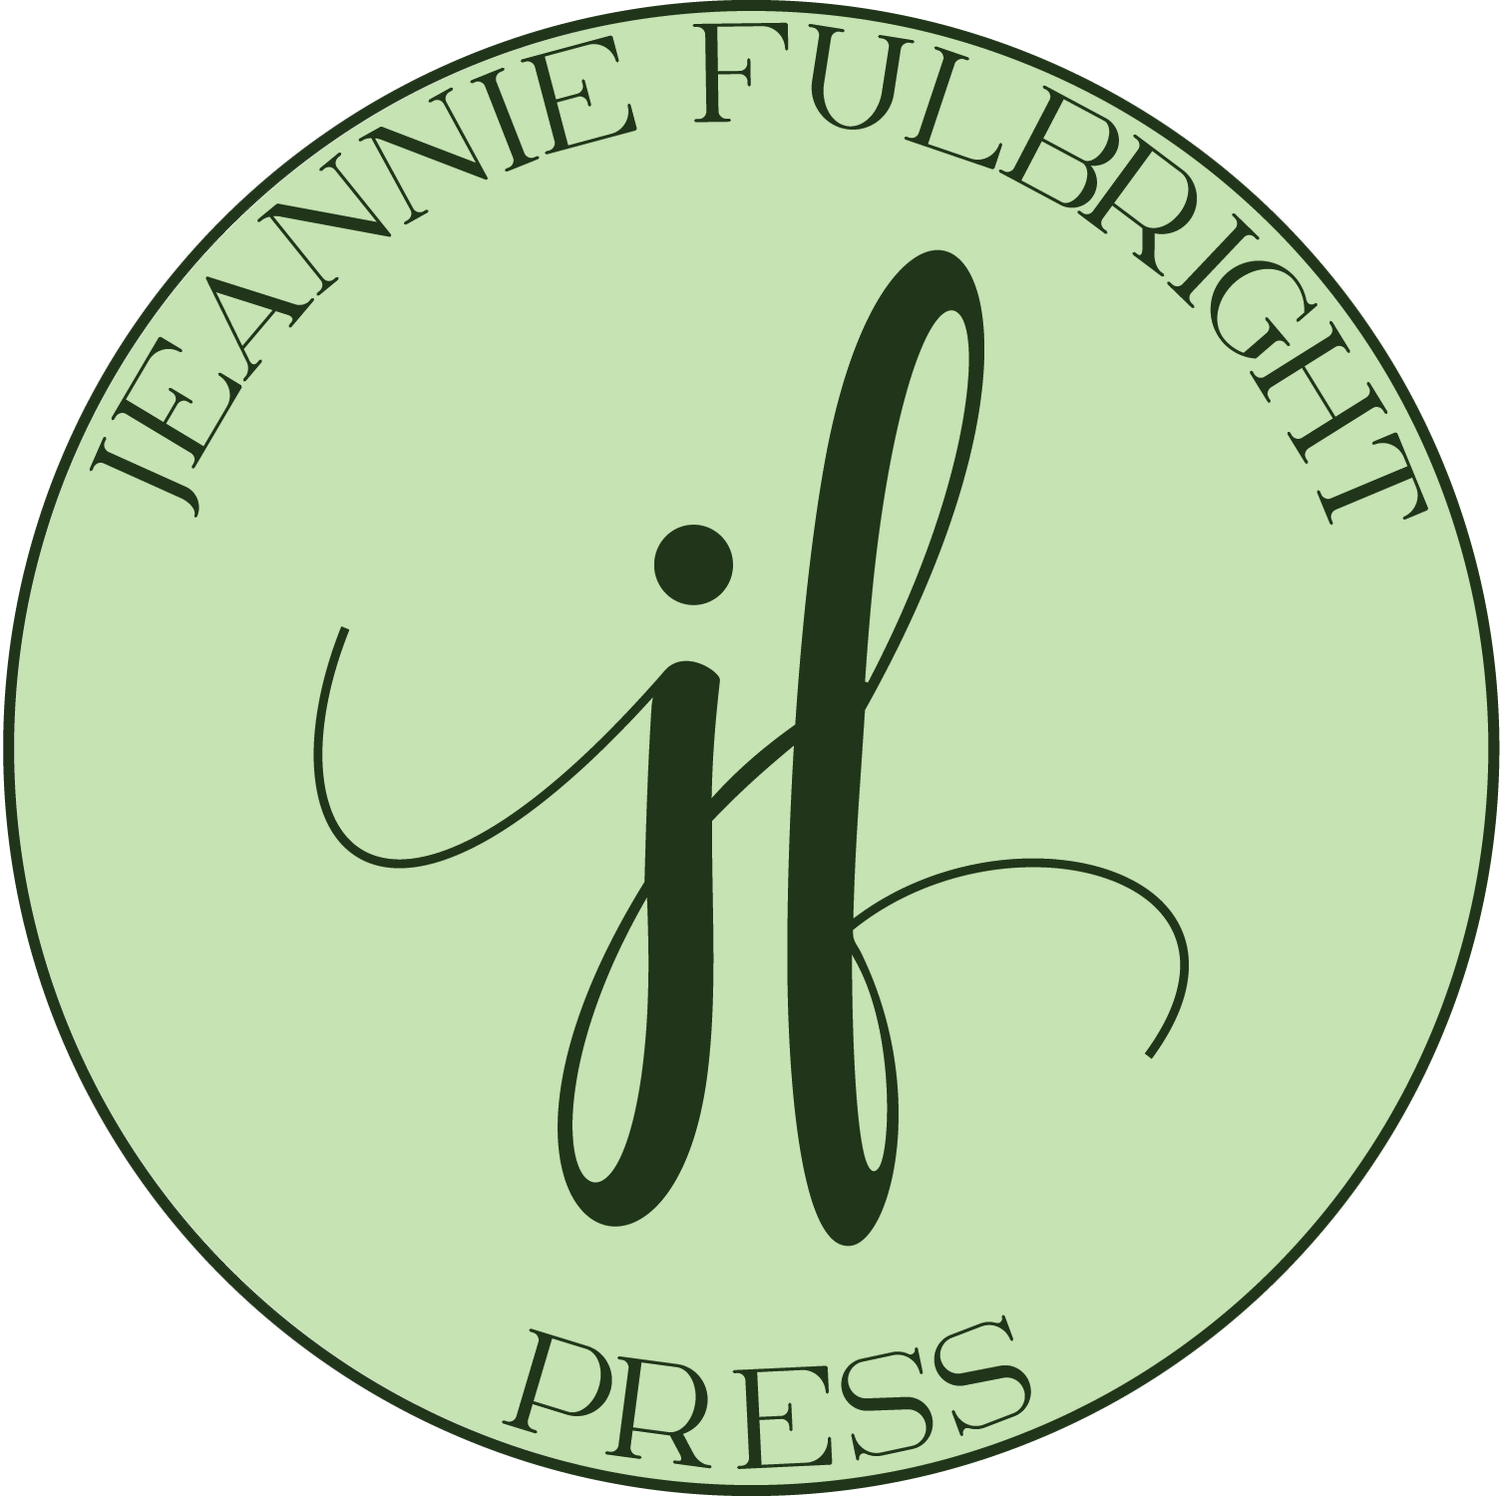 Jeannie Fulbright Press